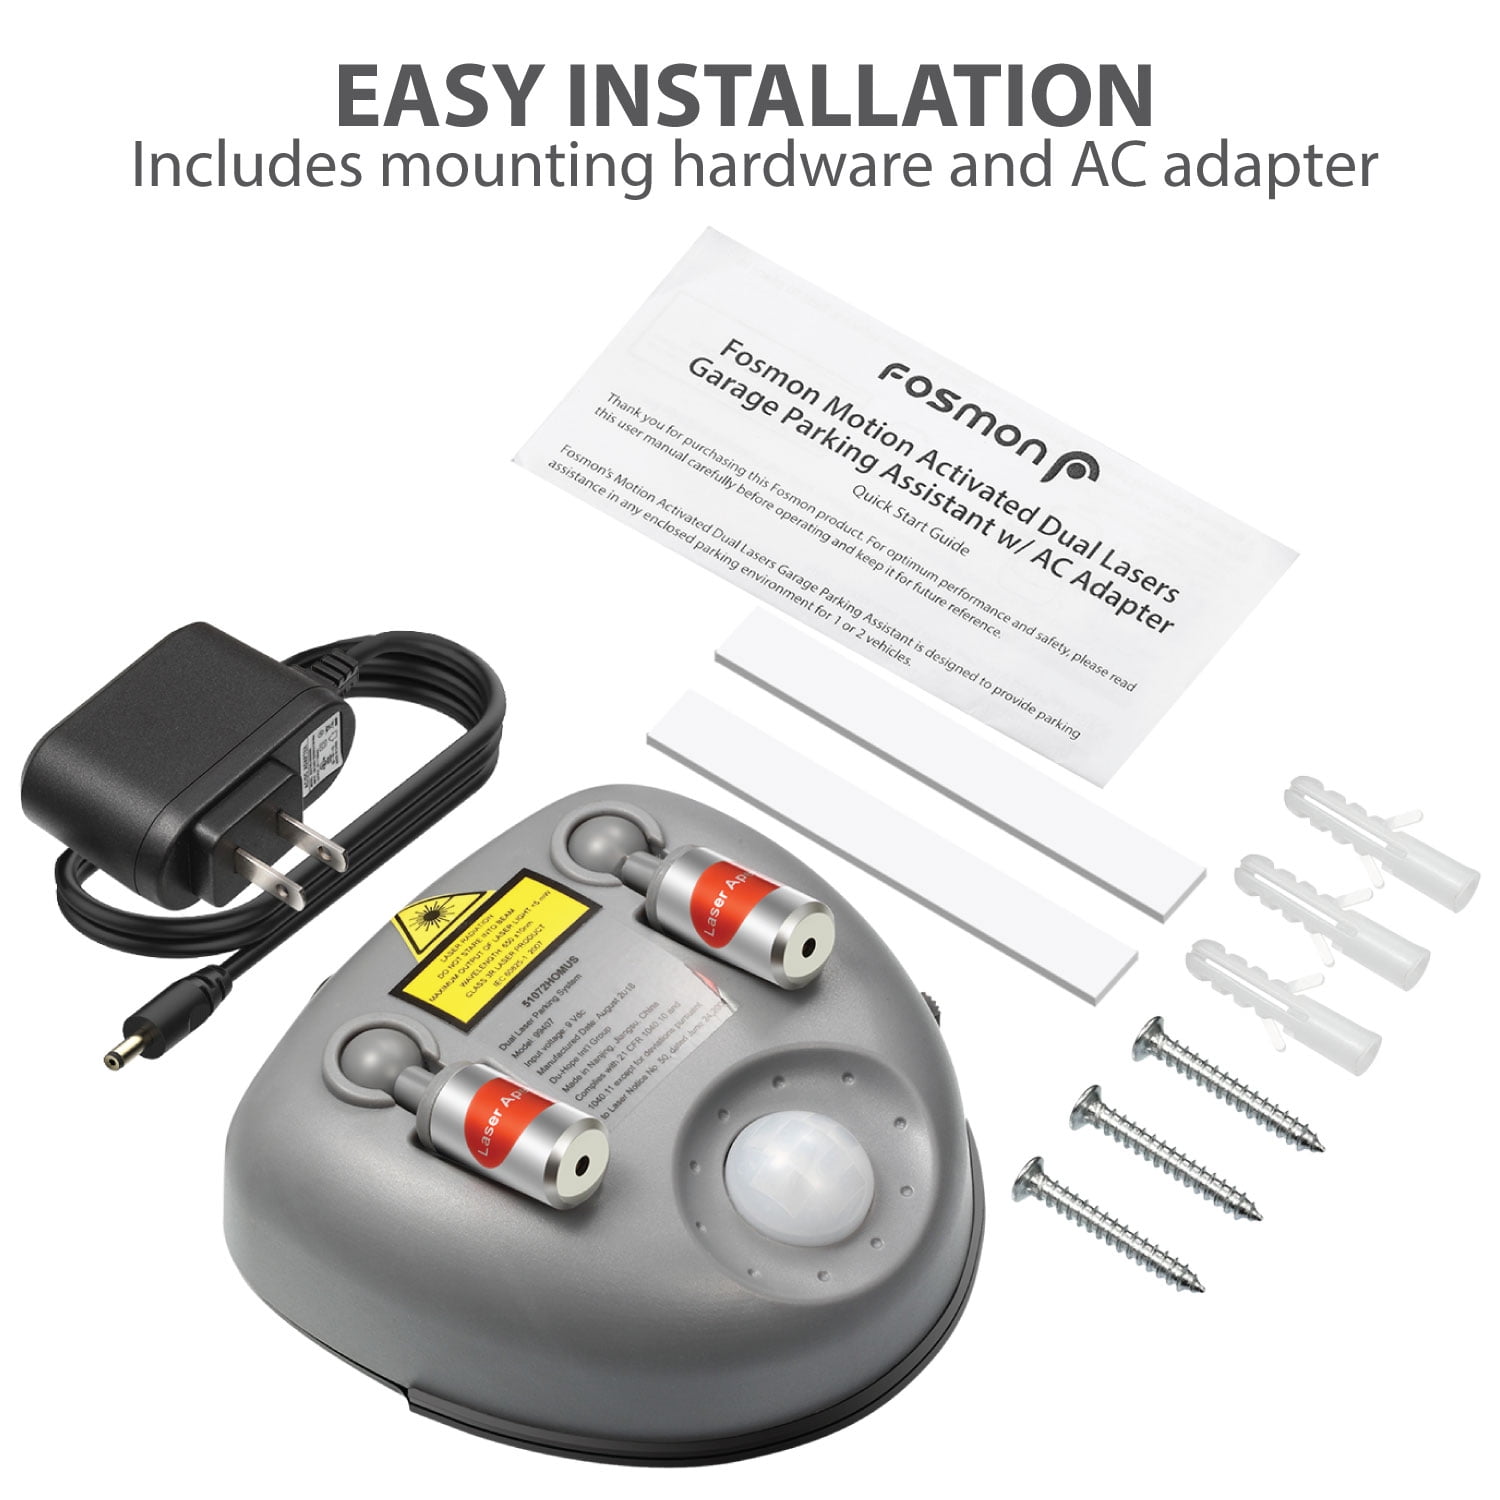 STANLEY GLPS Adjustable Dual Laser Garage Parking Aid Motion Activated Car Guide Marker